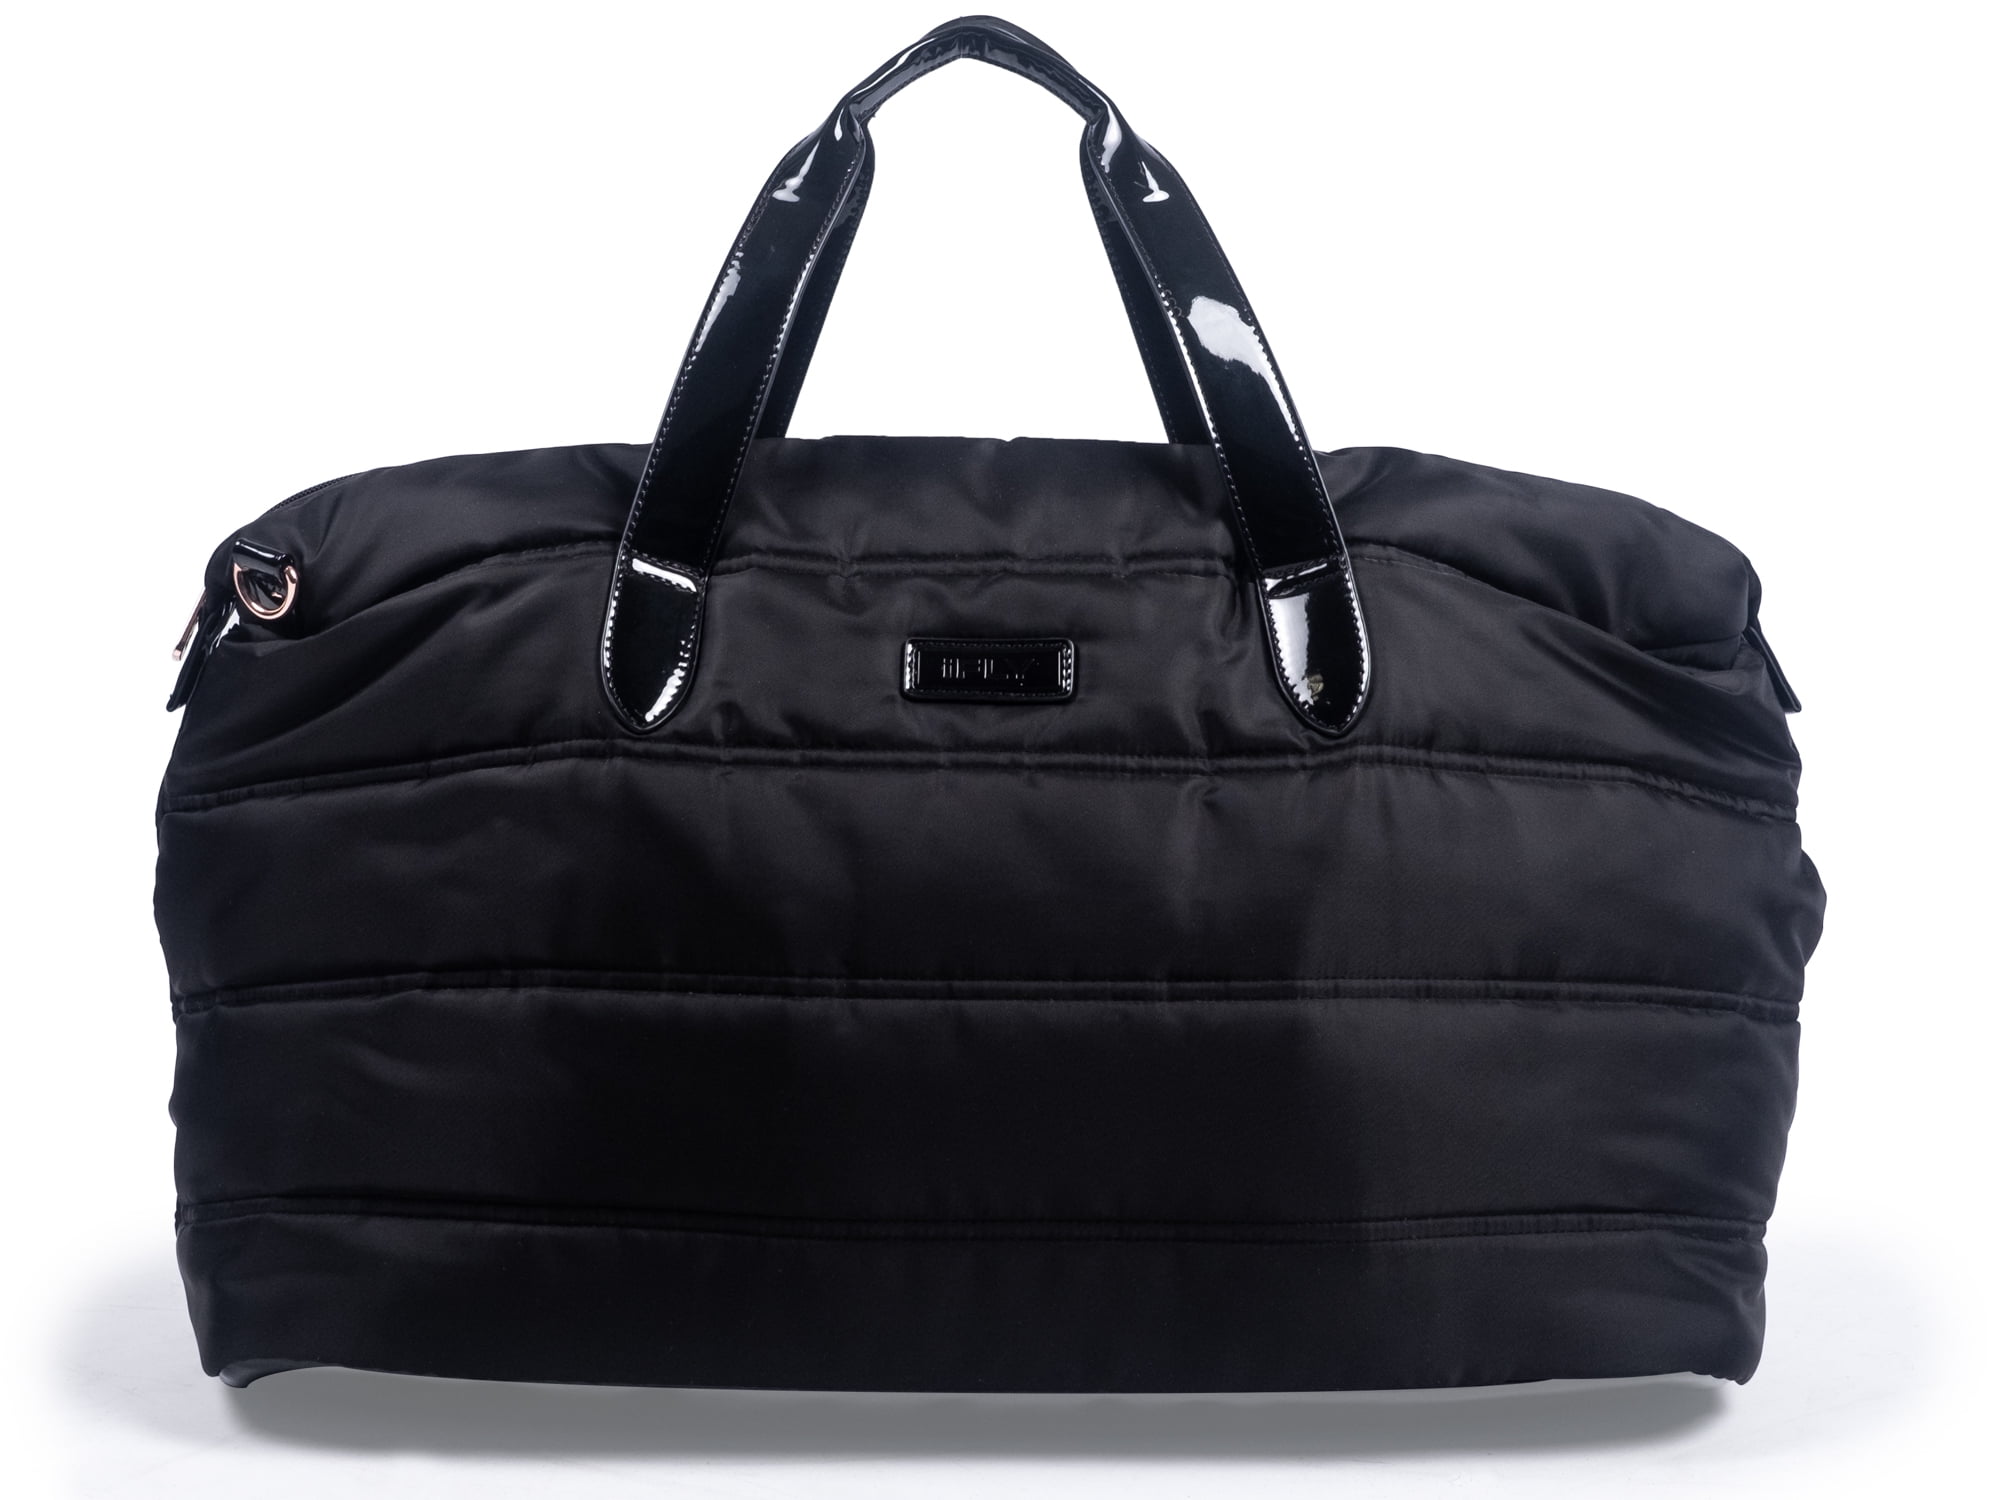 Luxury Travel Bag With Trolley Sleeve | semashow.com